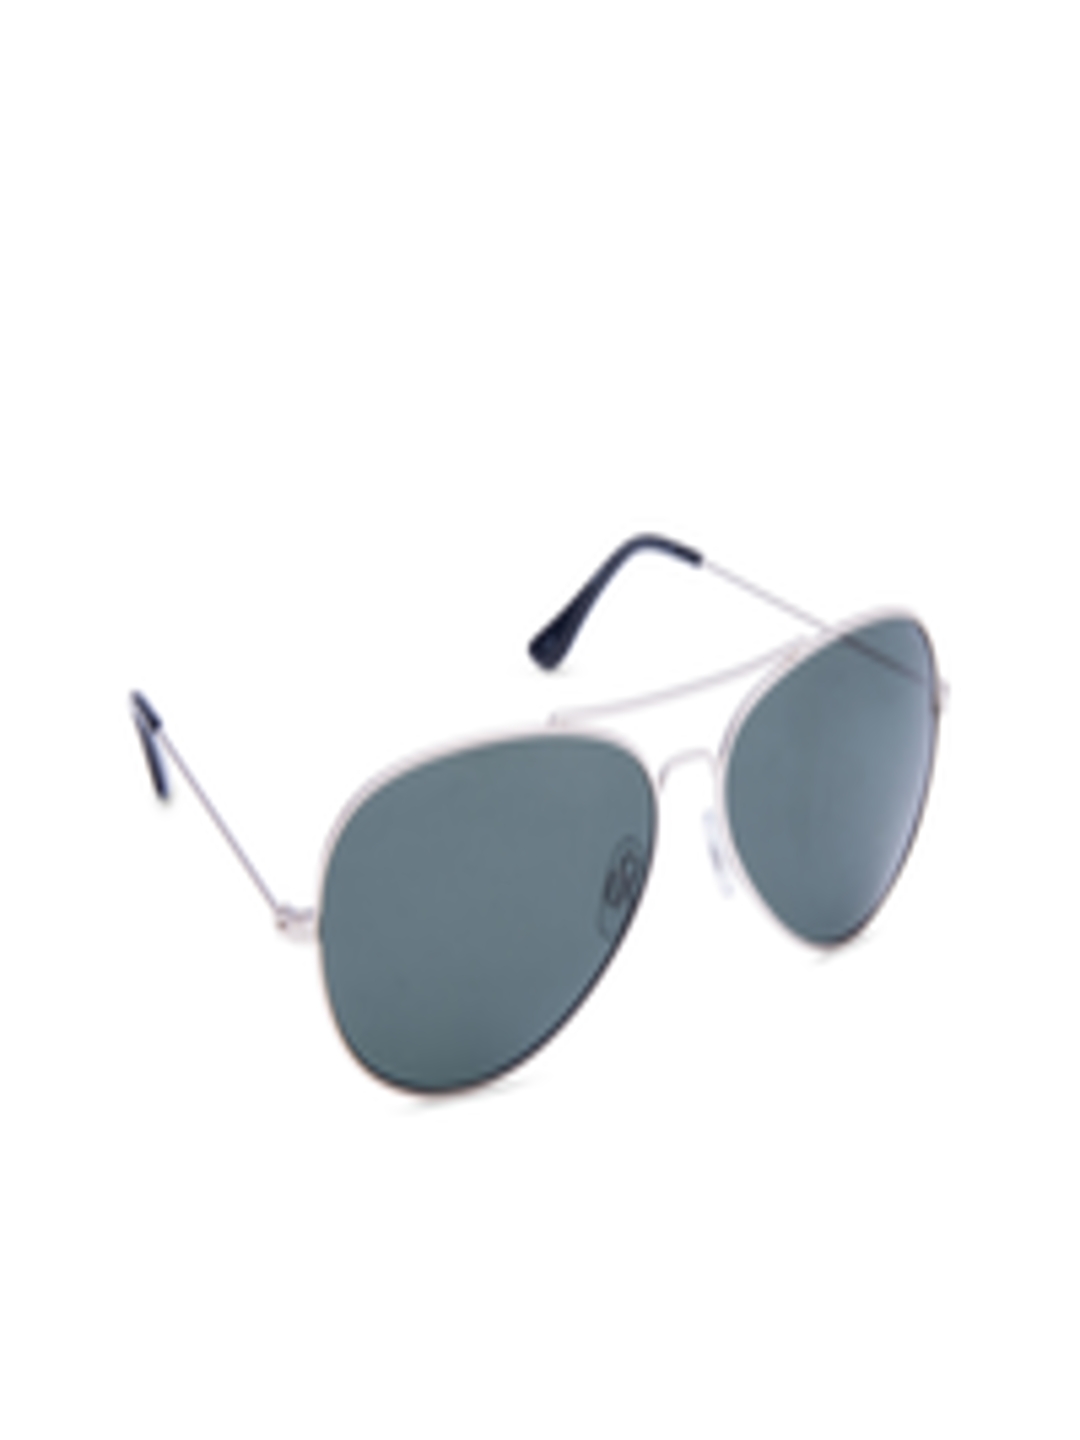 Buy INVU Women Aviator Sunglasses - Sunglasses for Women 2404217 | Myntra